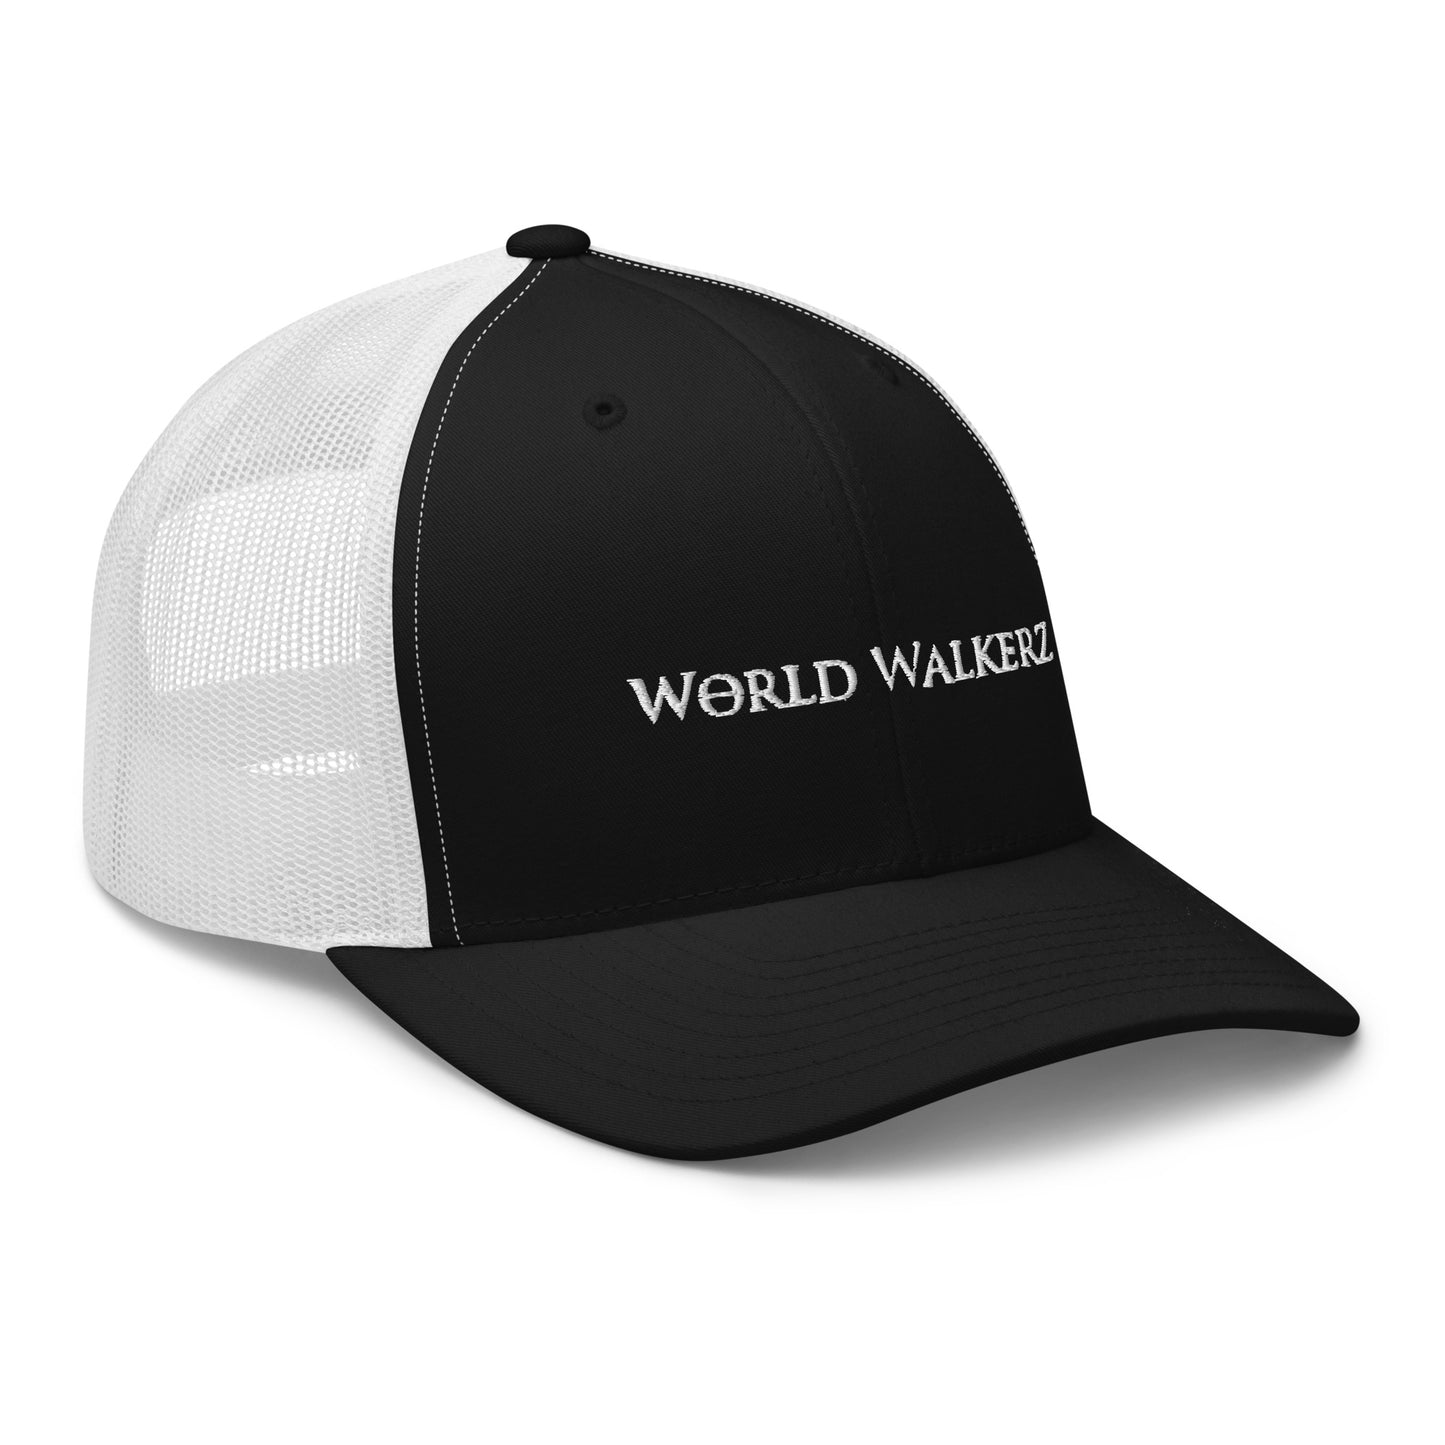 World Walkerz Trucker Cap